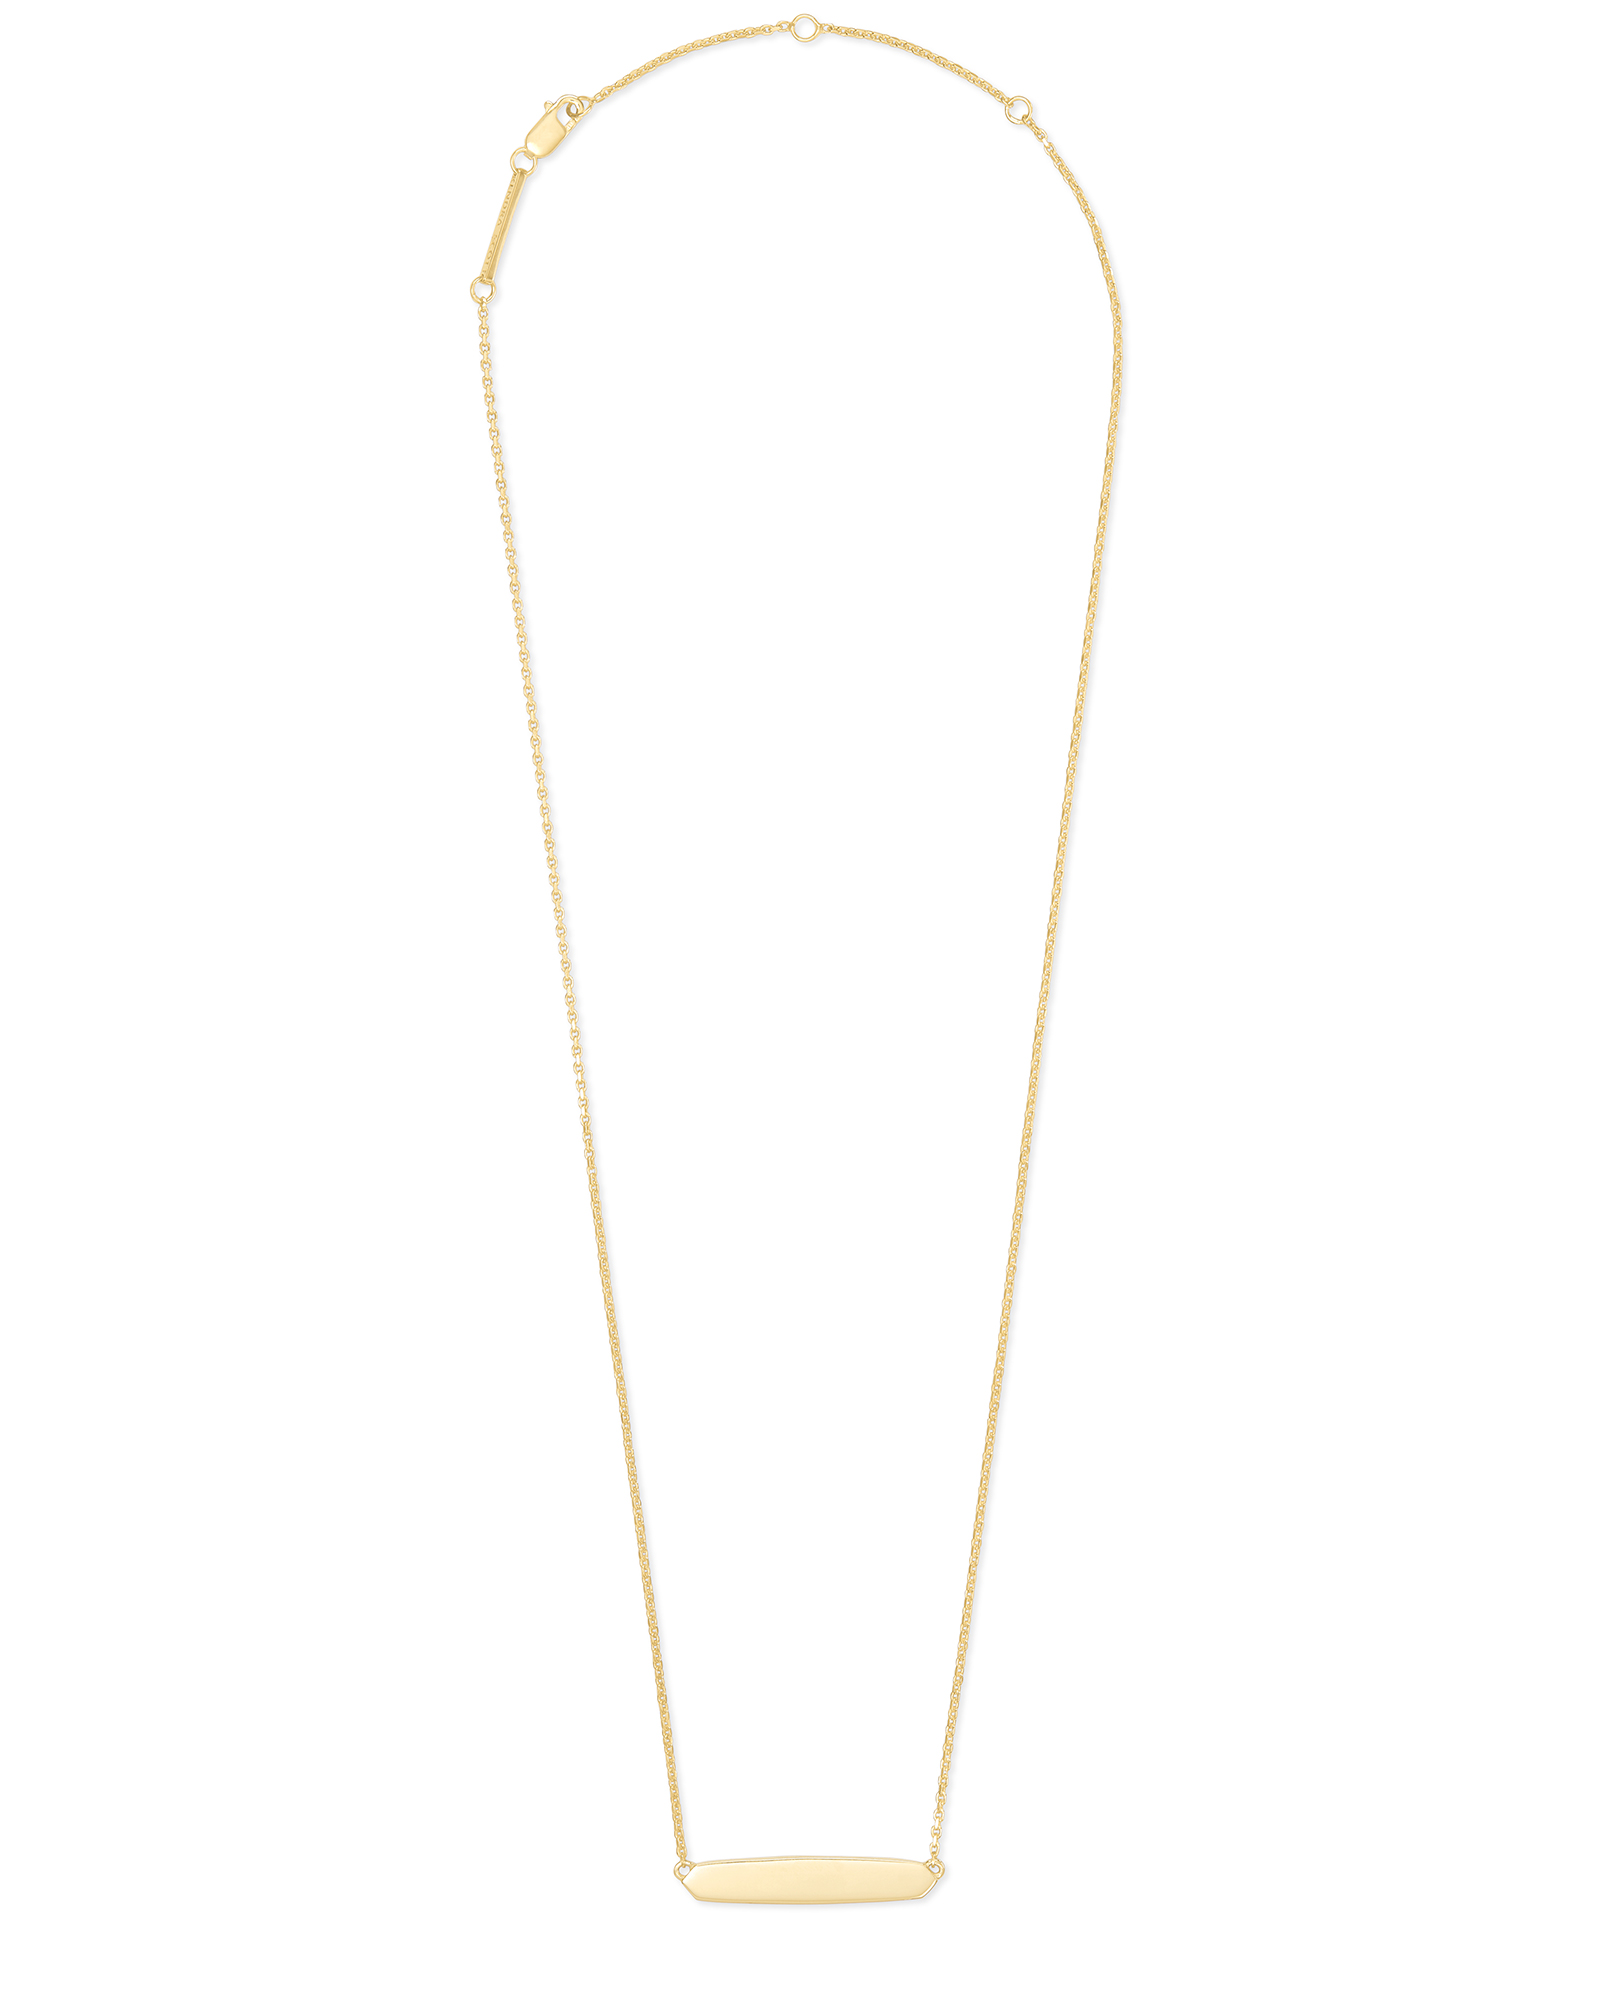 Mattie Bar Pendant Necklace in 18k Gold Vermeil | Kendra Scott